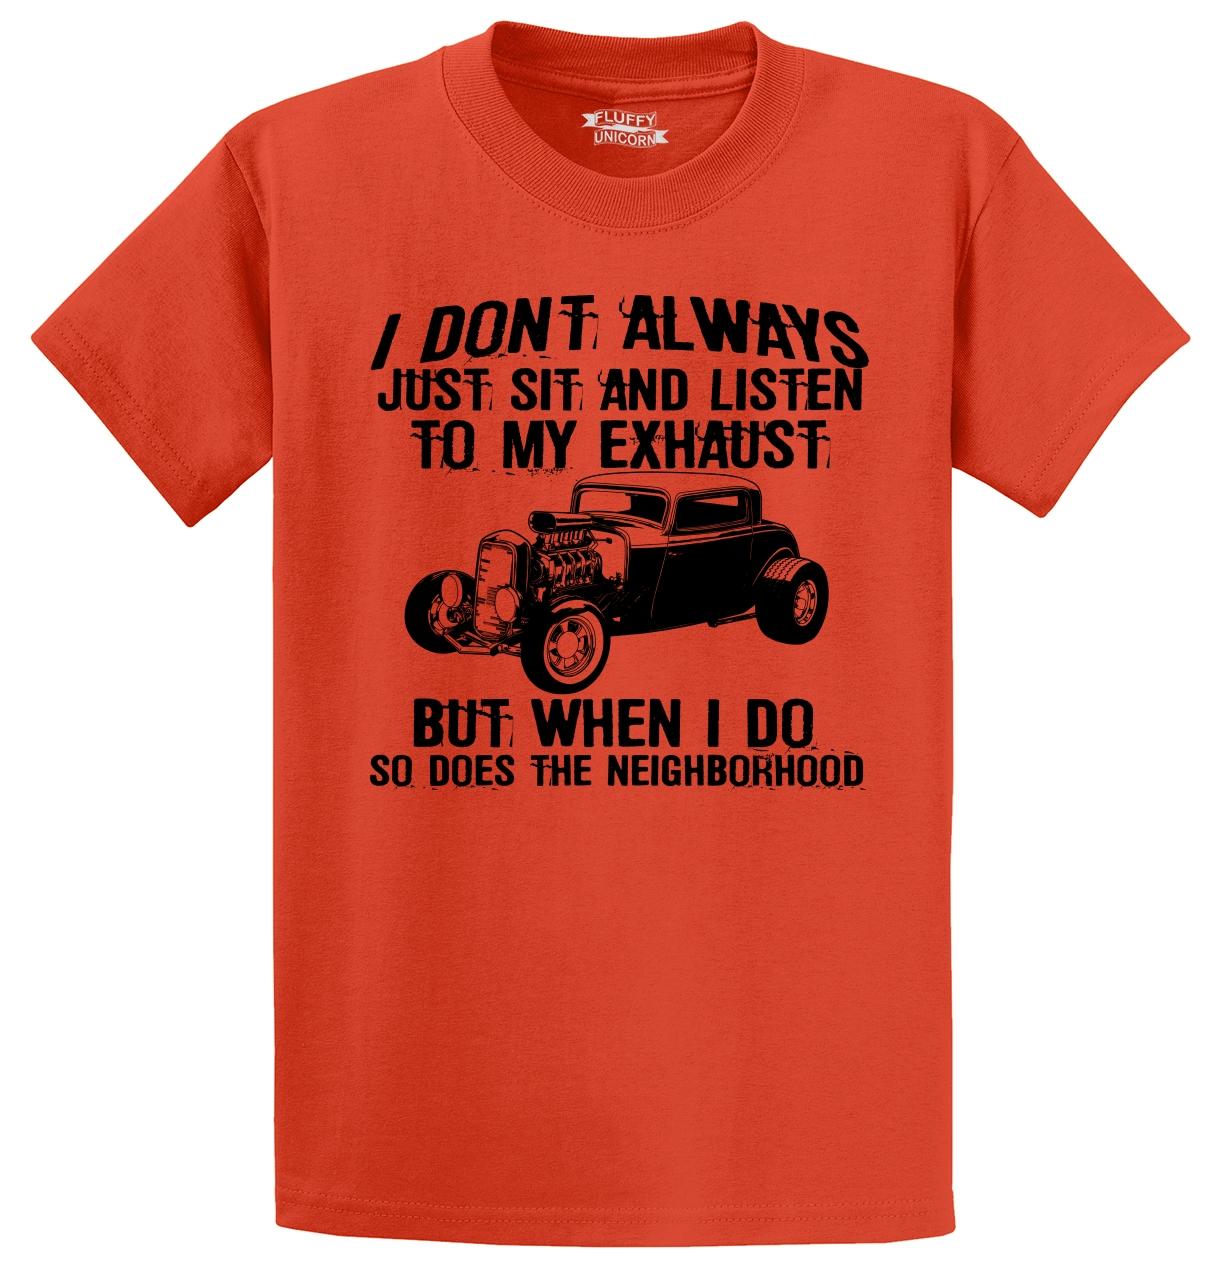 I Love Heart My A4 T Shirt S-XXL Mens Womens car gift 